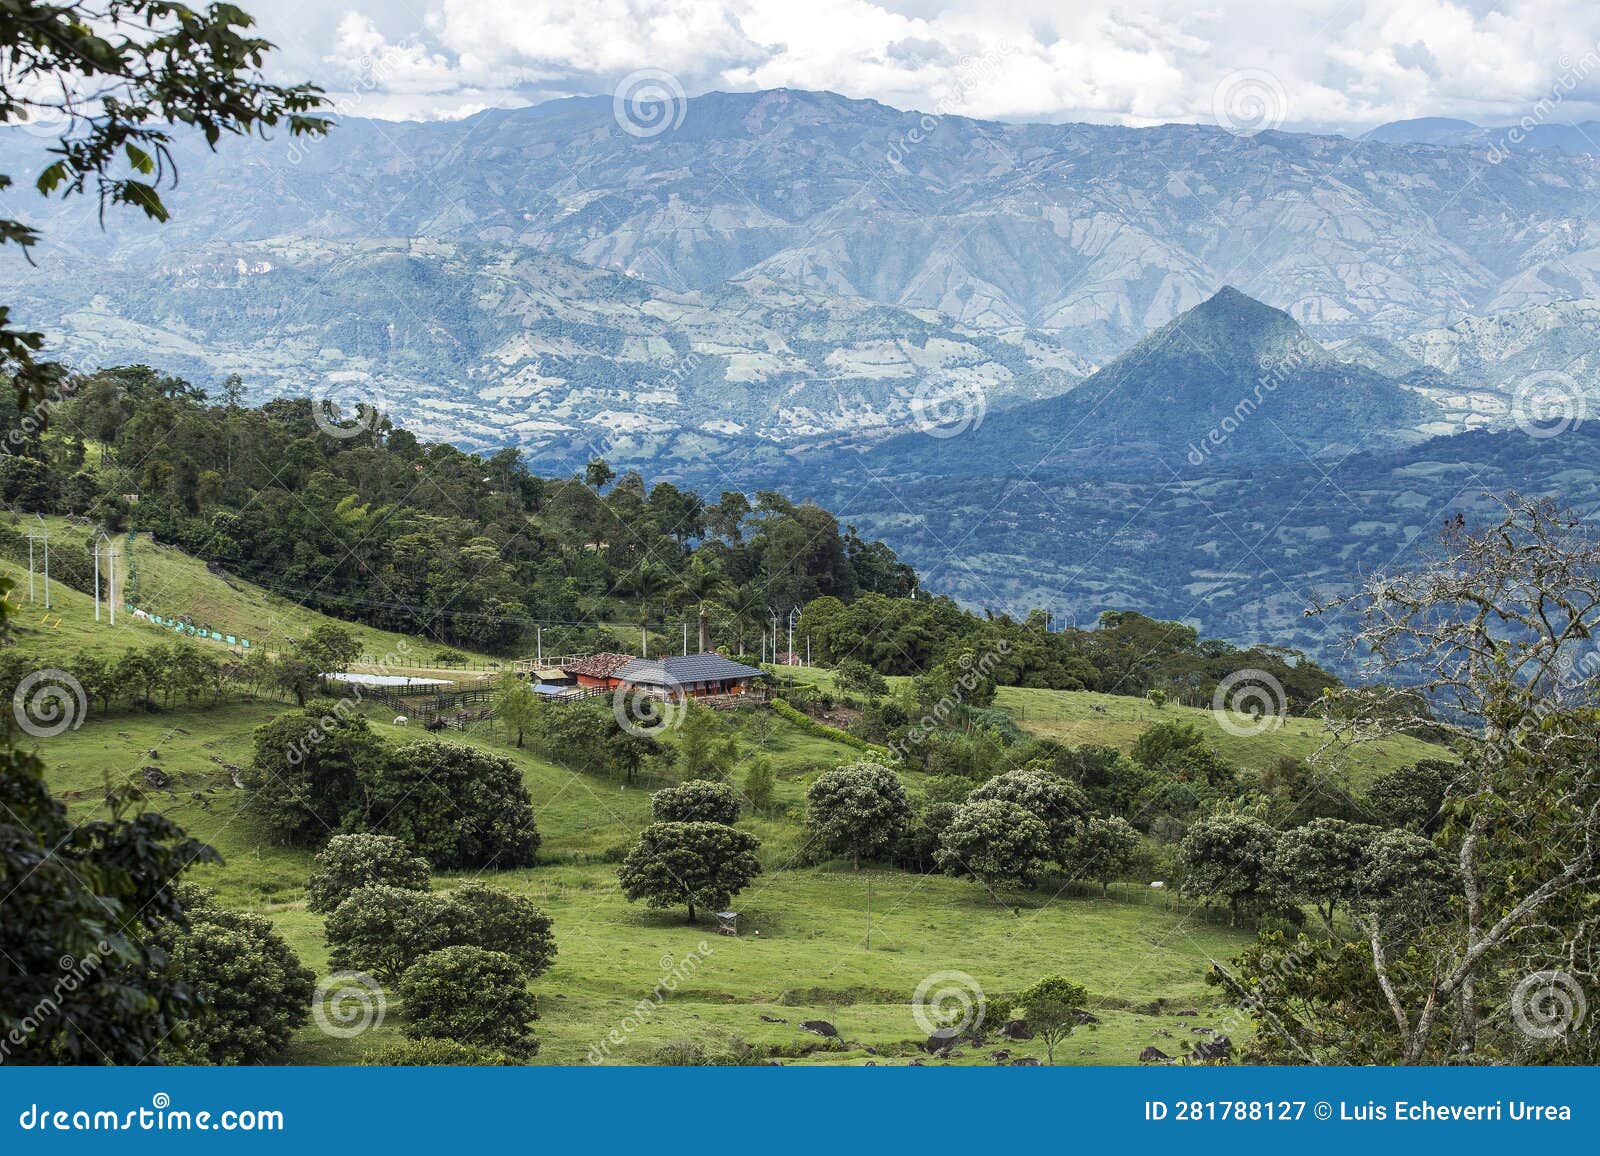 beautiful mountainous landscape - southwest antioquia, colombia